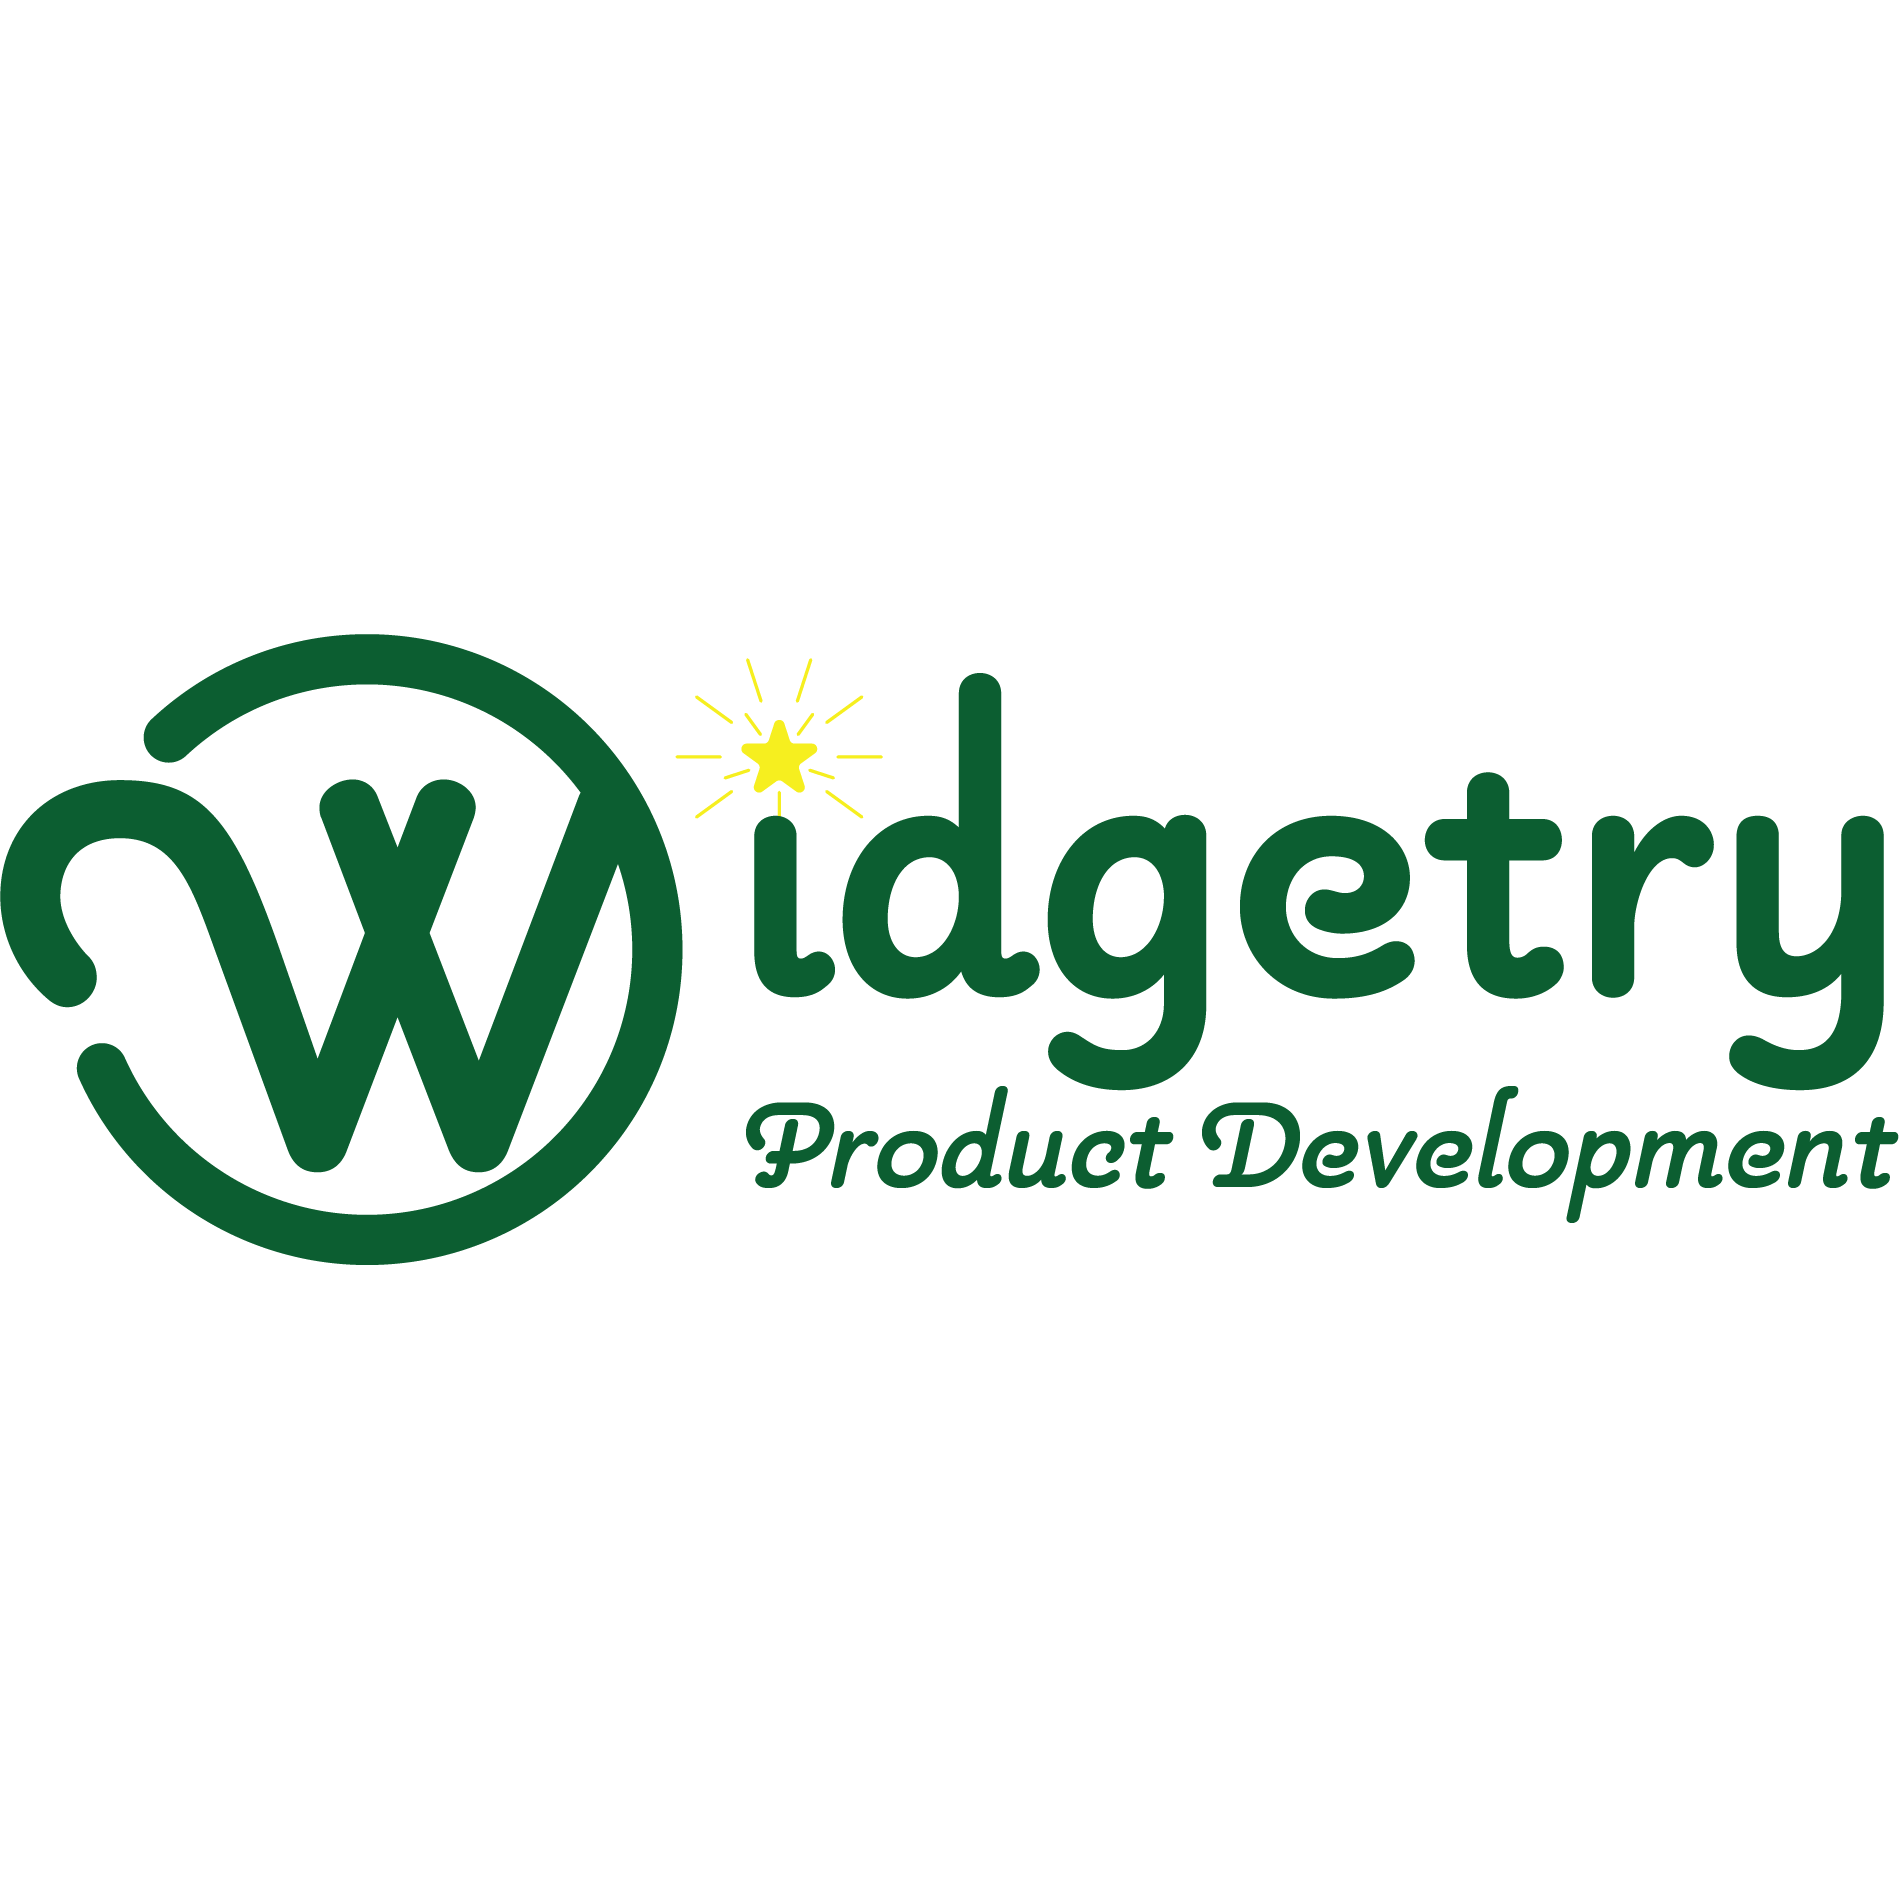 Widgetry Product Development